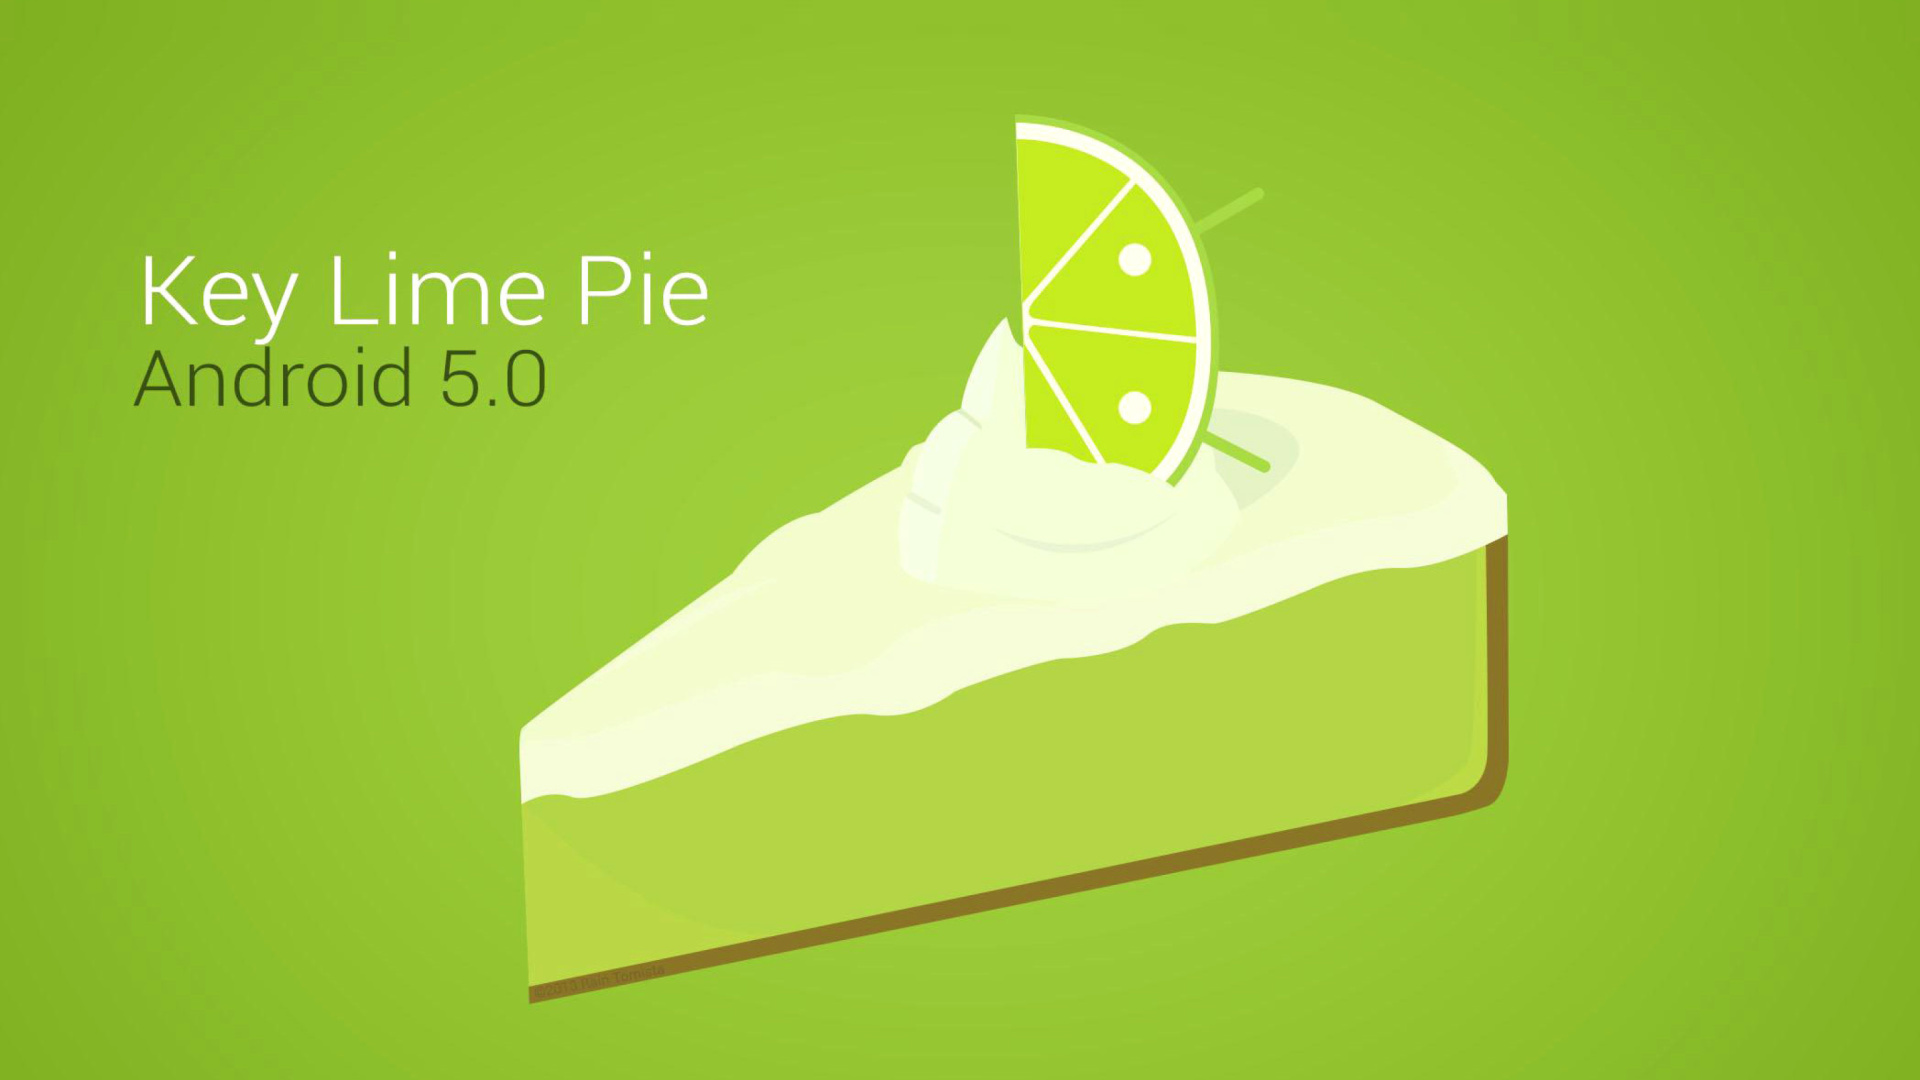 Обои Concept Android 5.0 Key Lime Pie 1920x1080